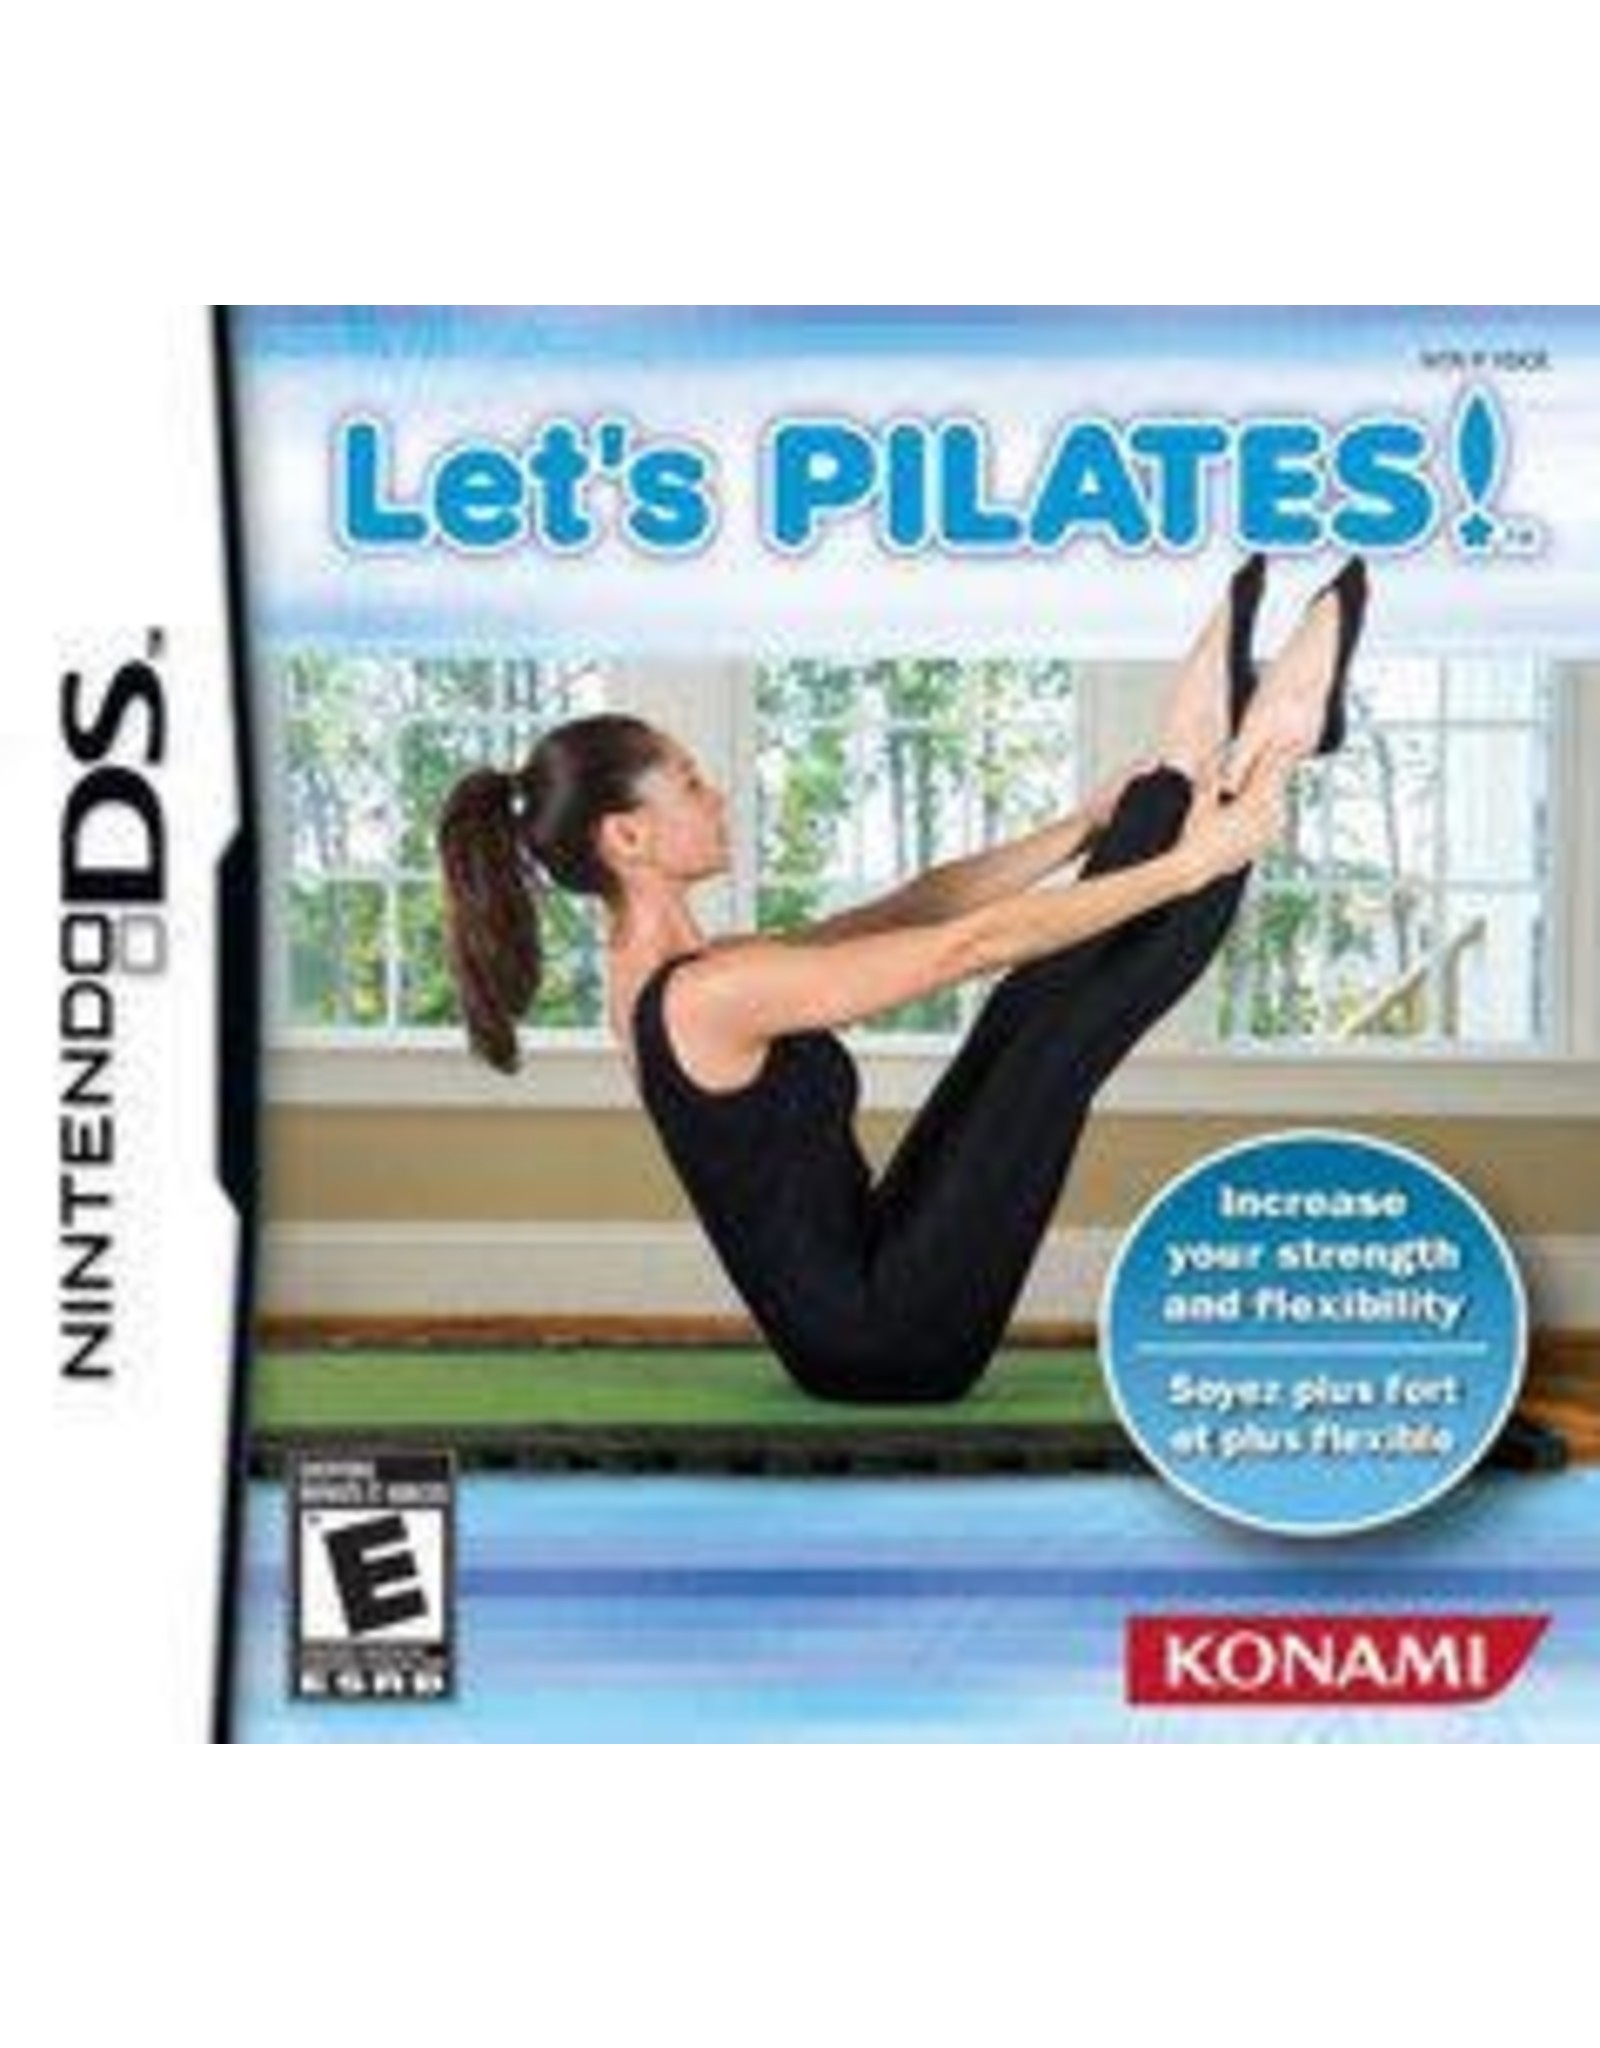 Nintendo DS Let's Pilates (CiB)